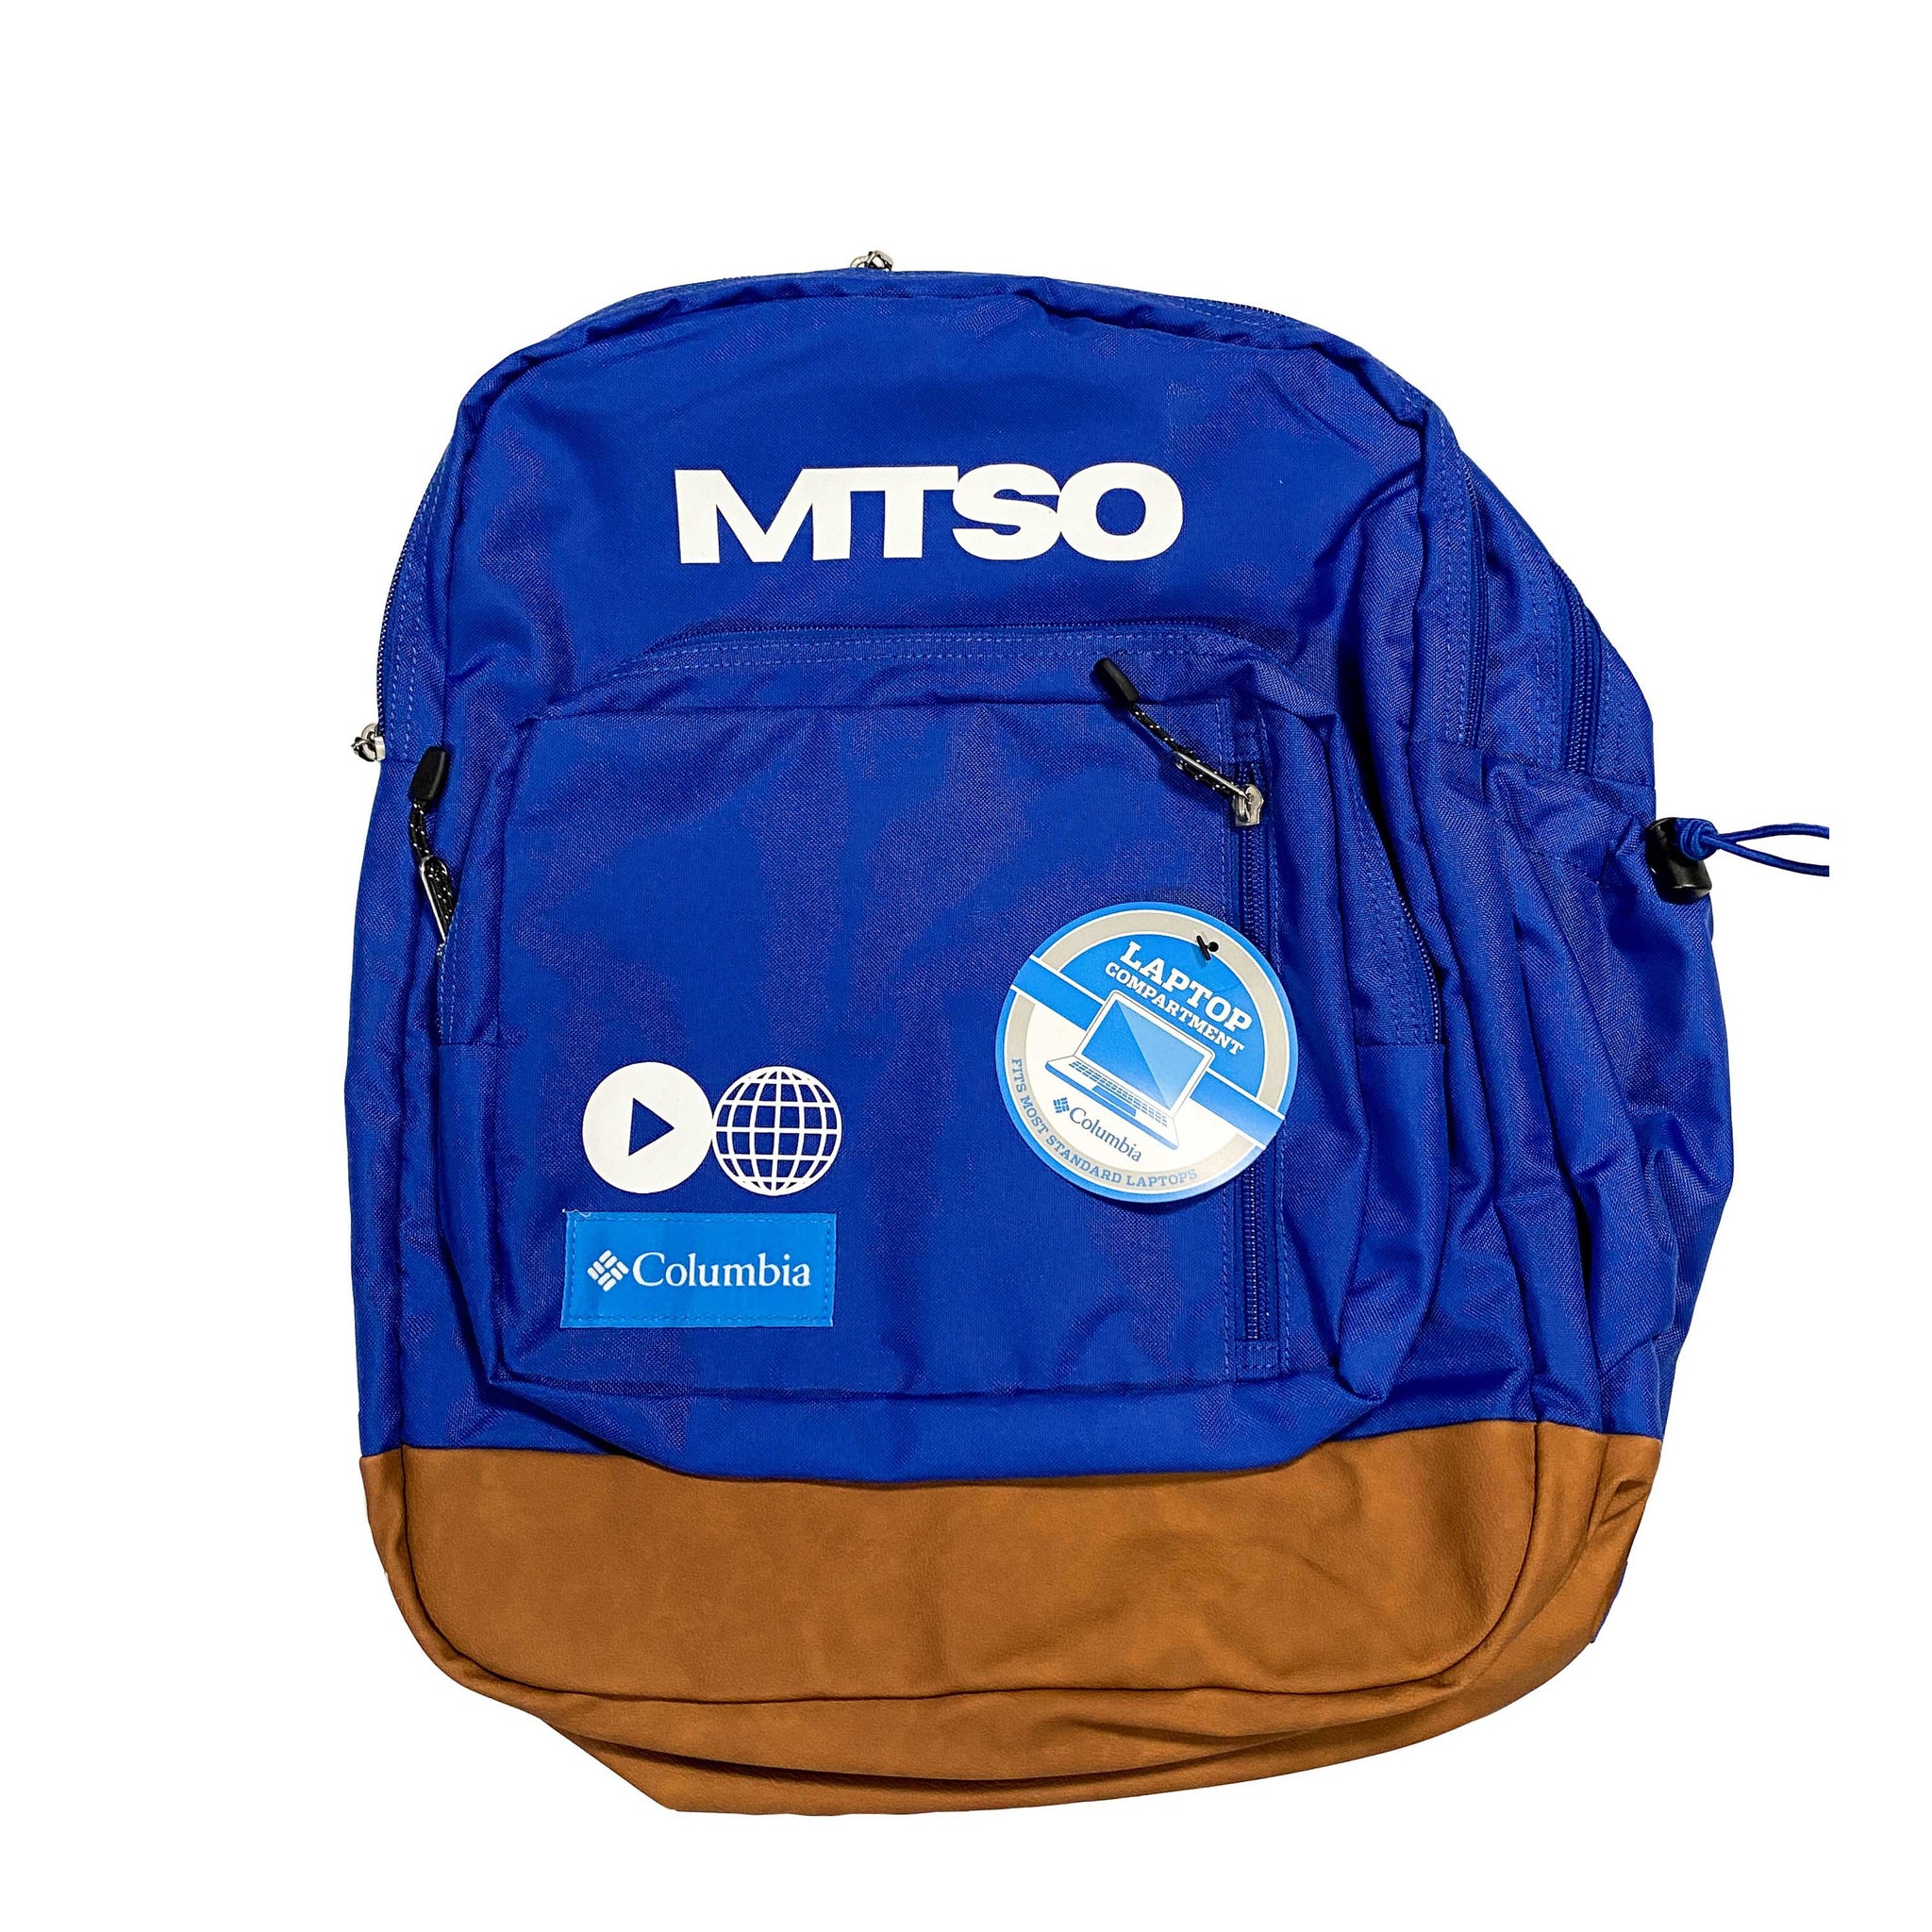 Columbia X MTSO Backpack - Blue